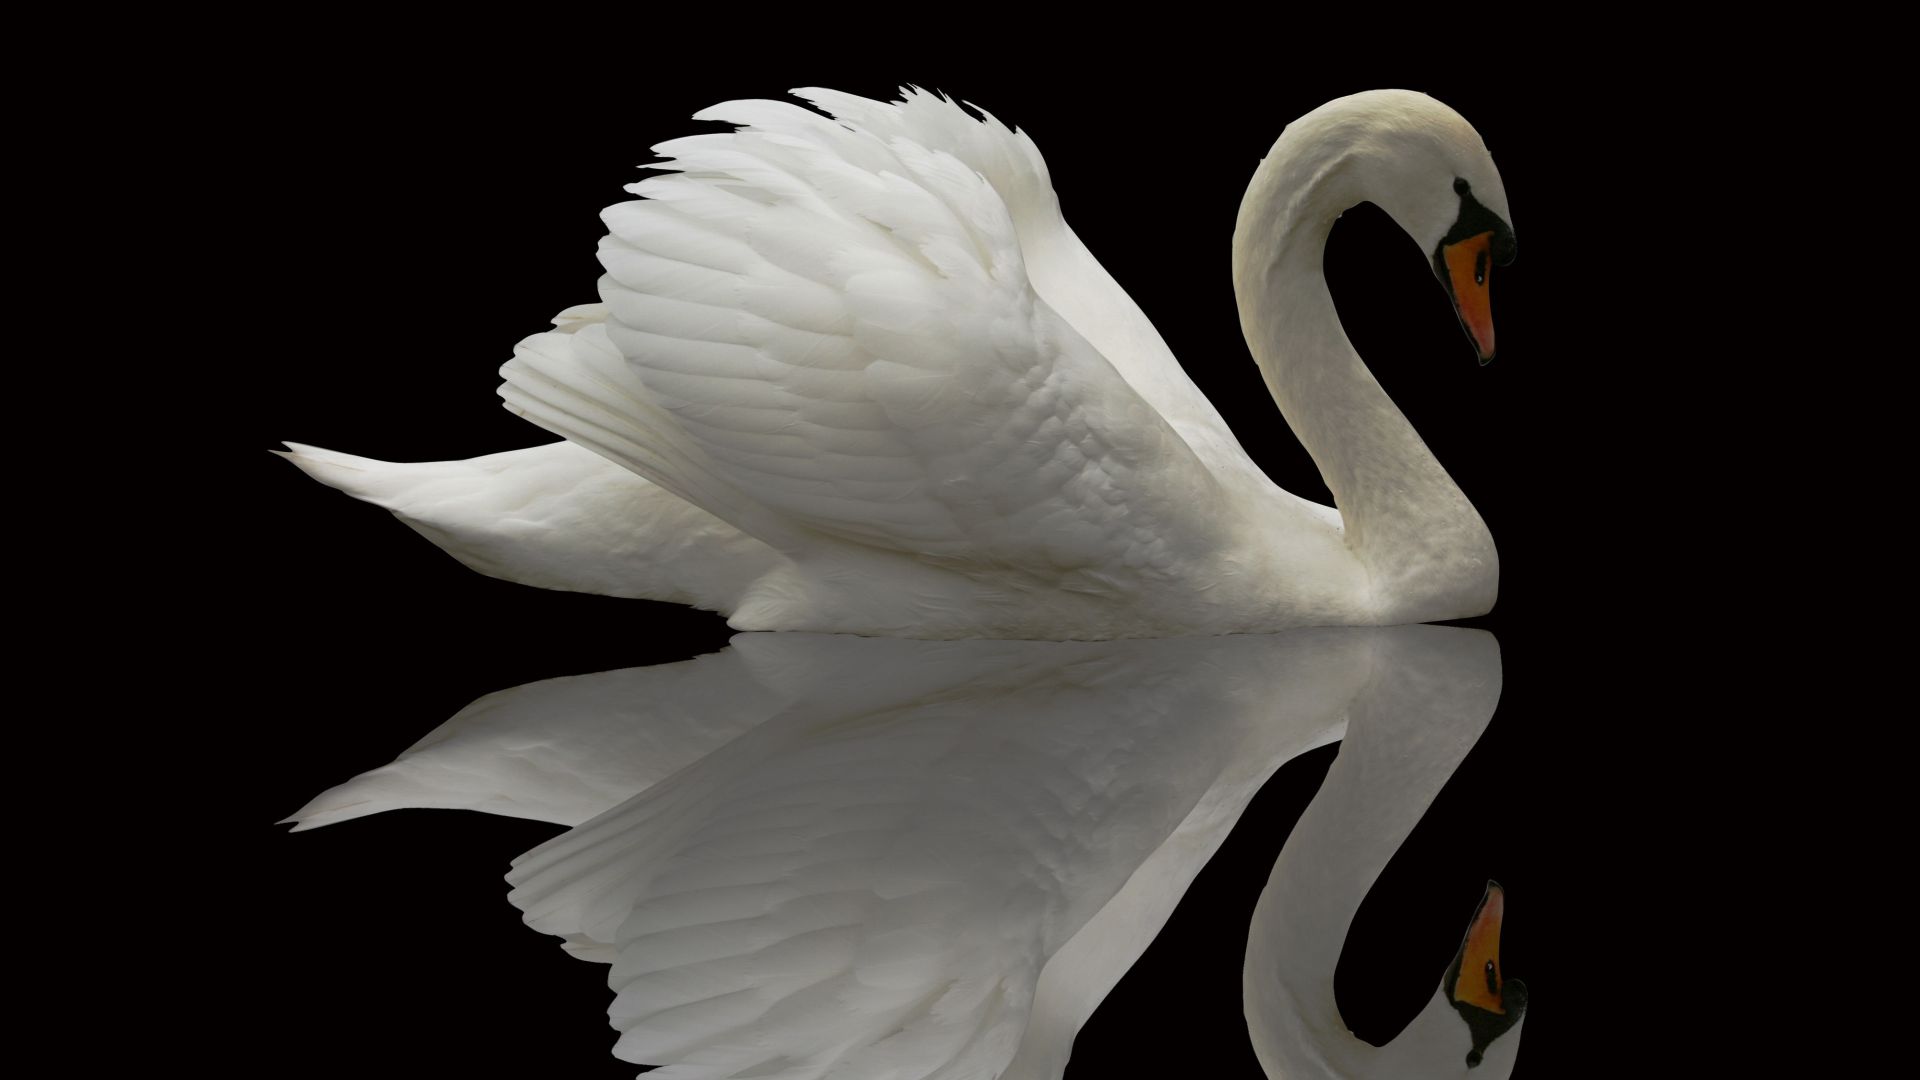 Swan, reflection, cute animals (horizontal)